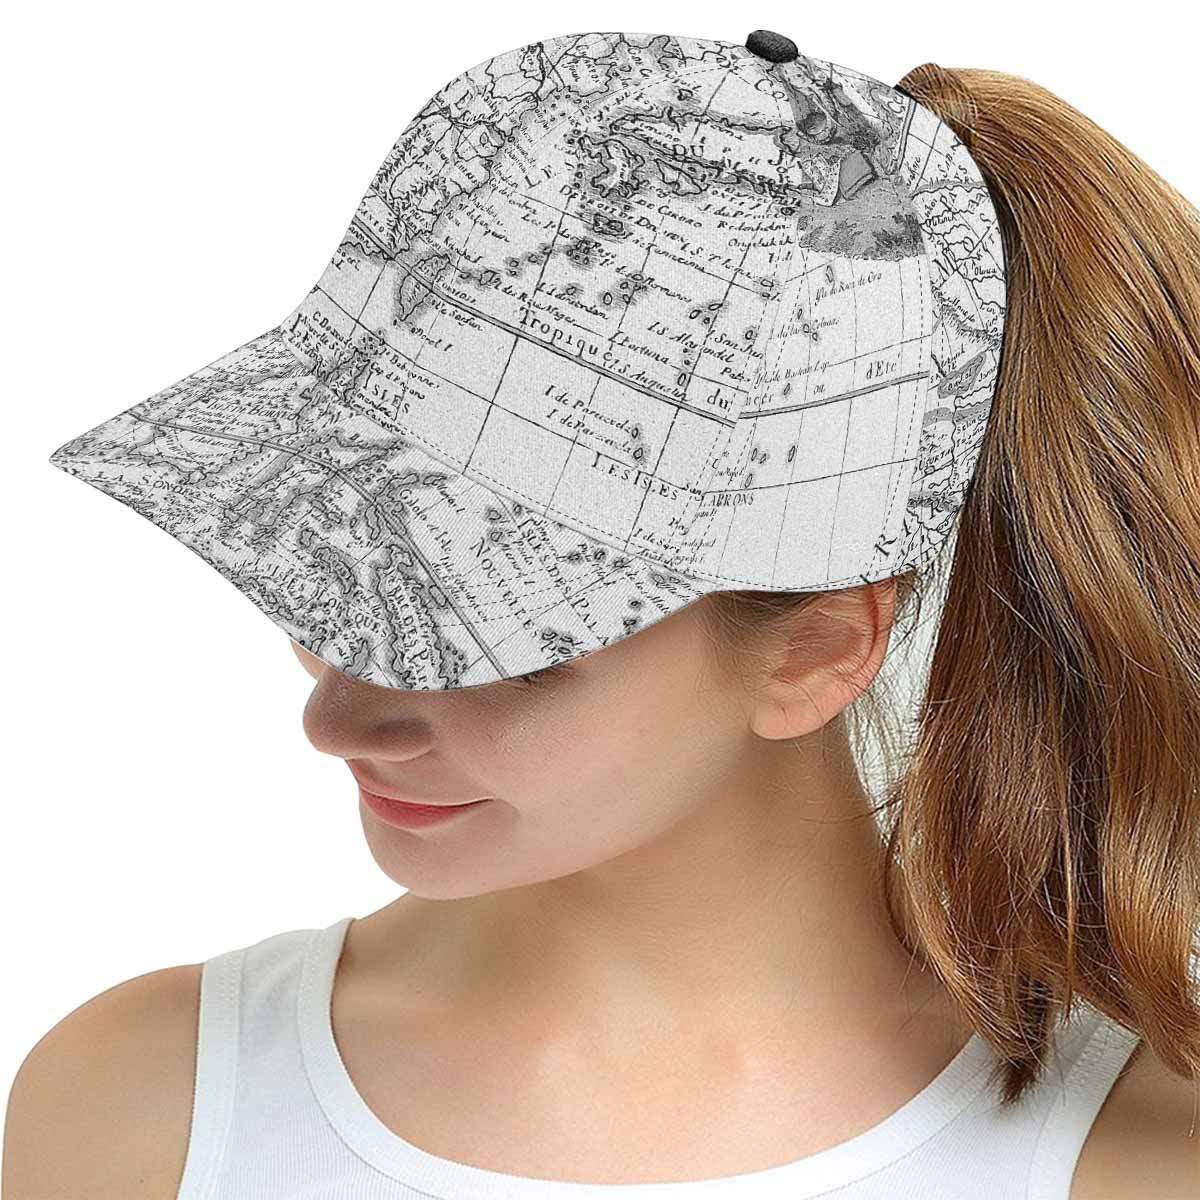 Antique Map design mens or womens deep snapback cap, trucker hat, Design 8